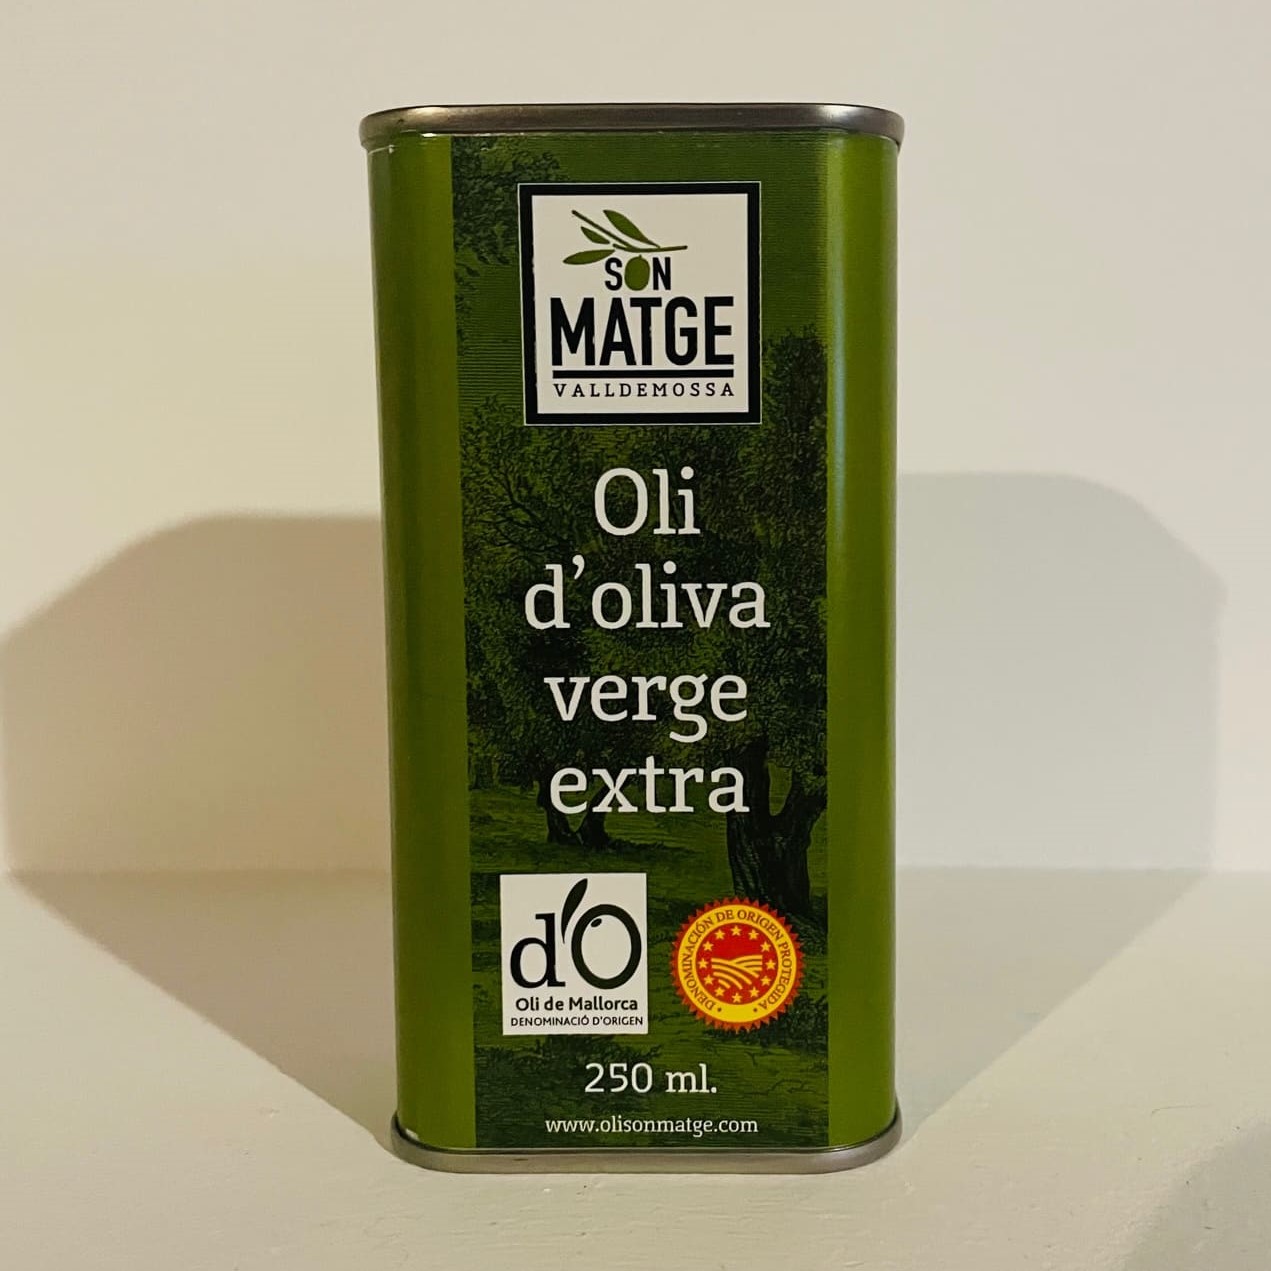 Son Matge g.U. Oli de Mallorca Öl in 250 ml Dose